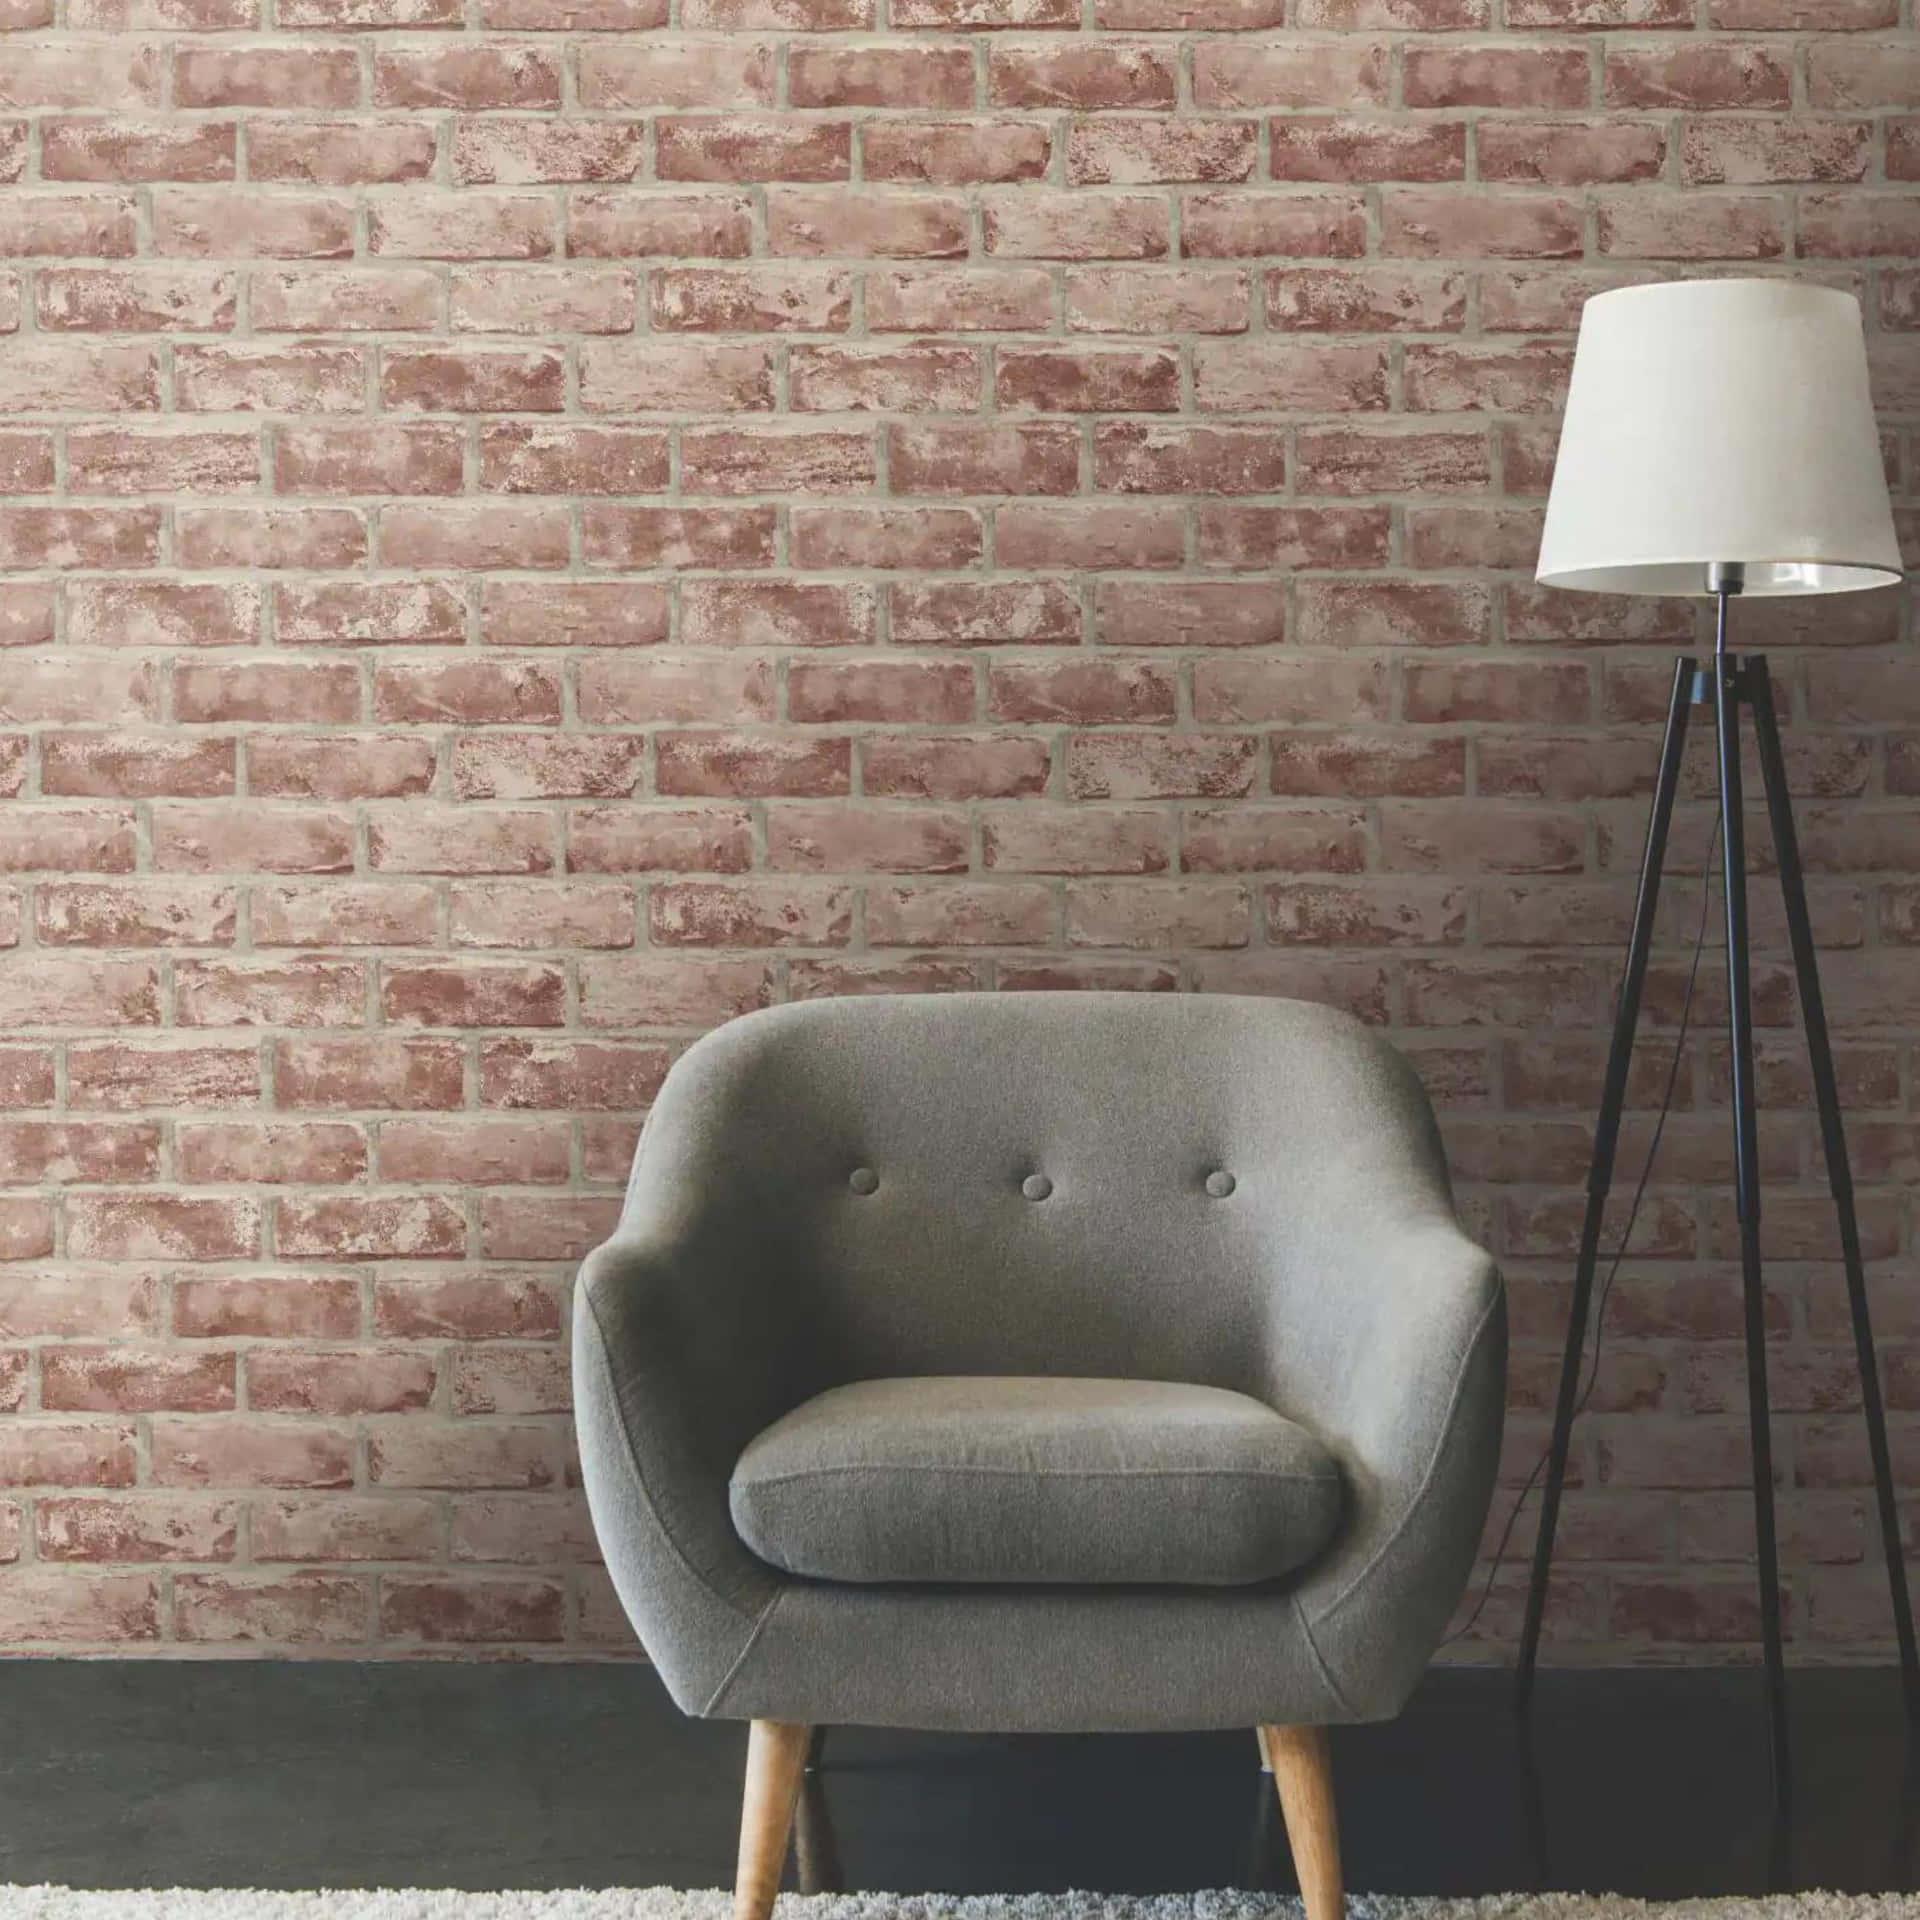 Classic Brown Brick Wall Texture Wallpaper